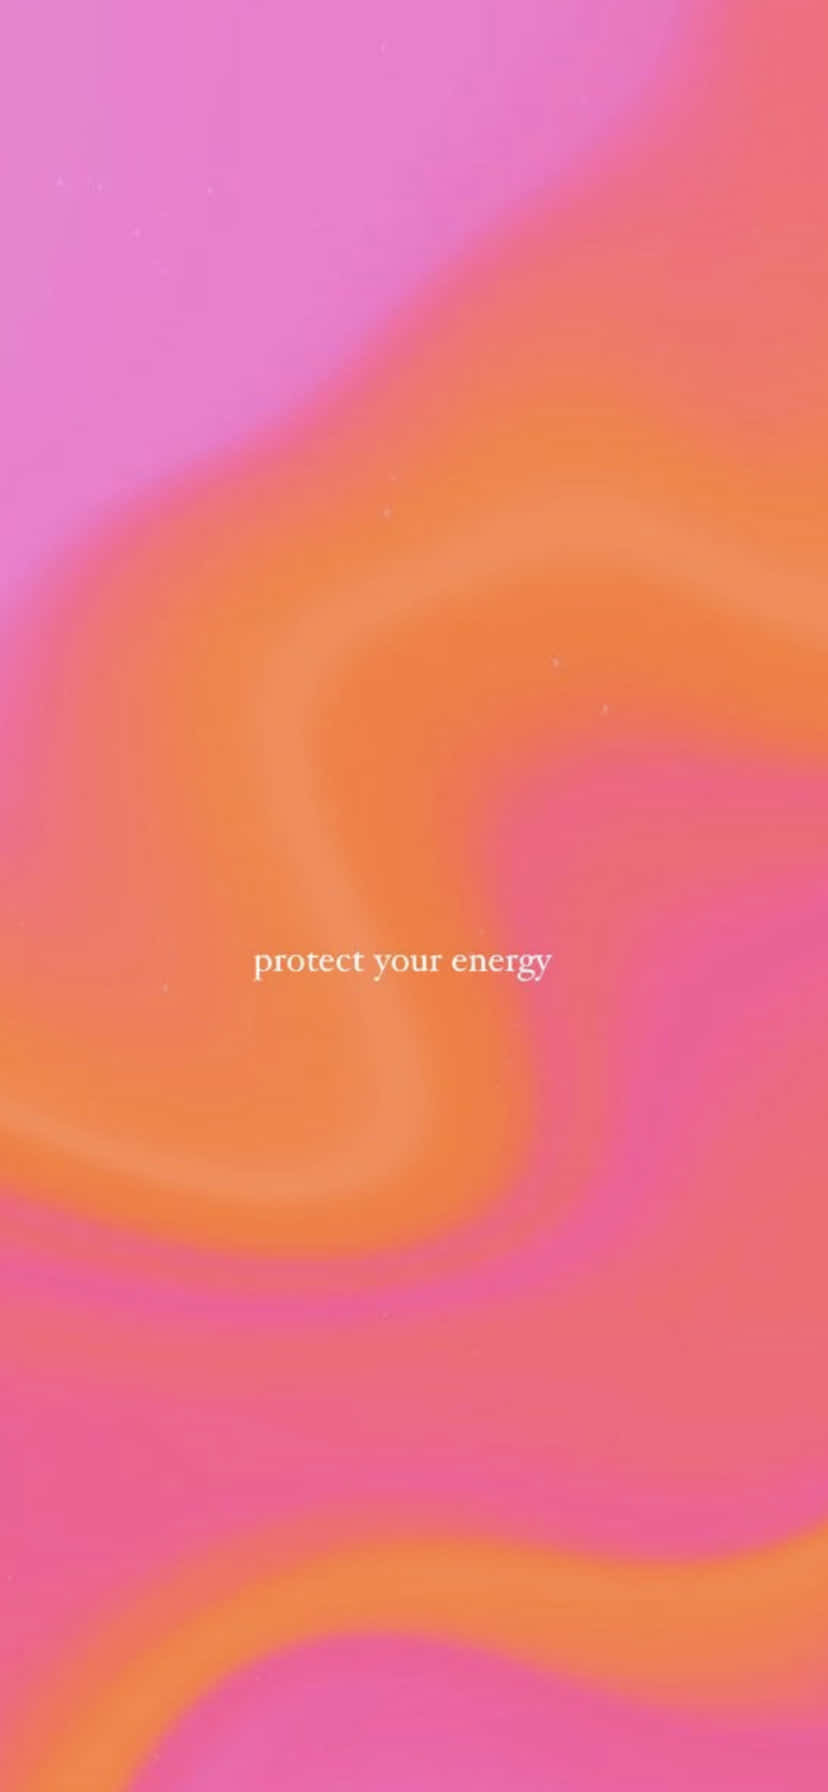 Protect Your Energy Pink Orange Aura Wallpaper